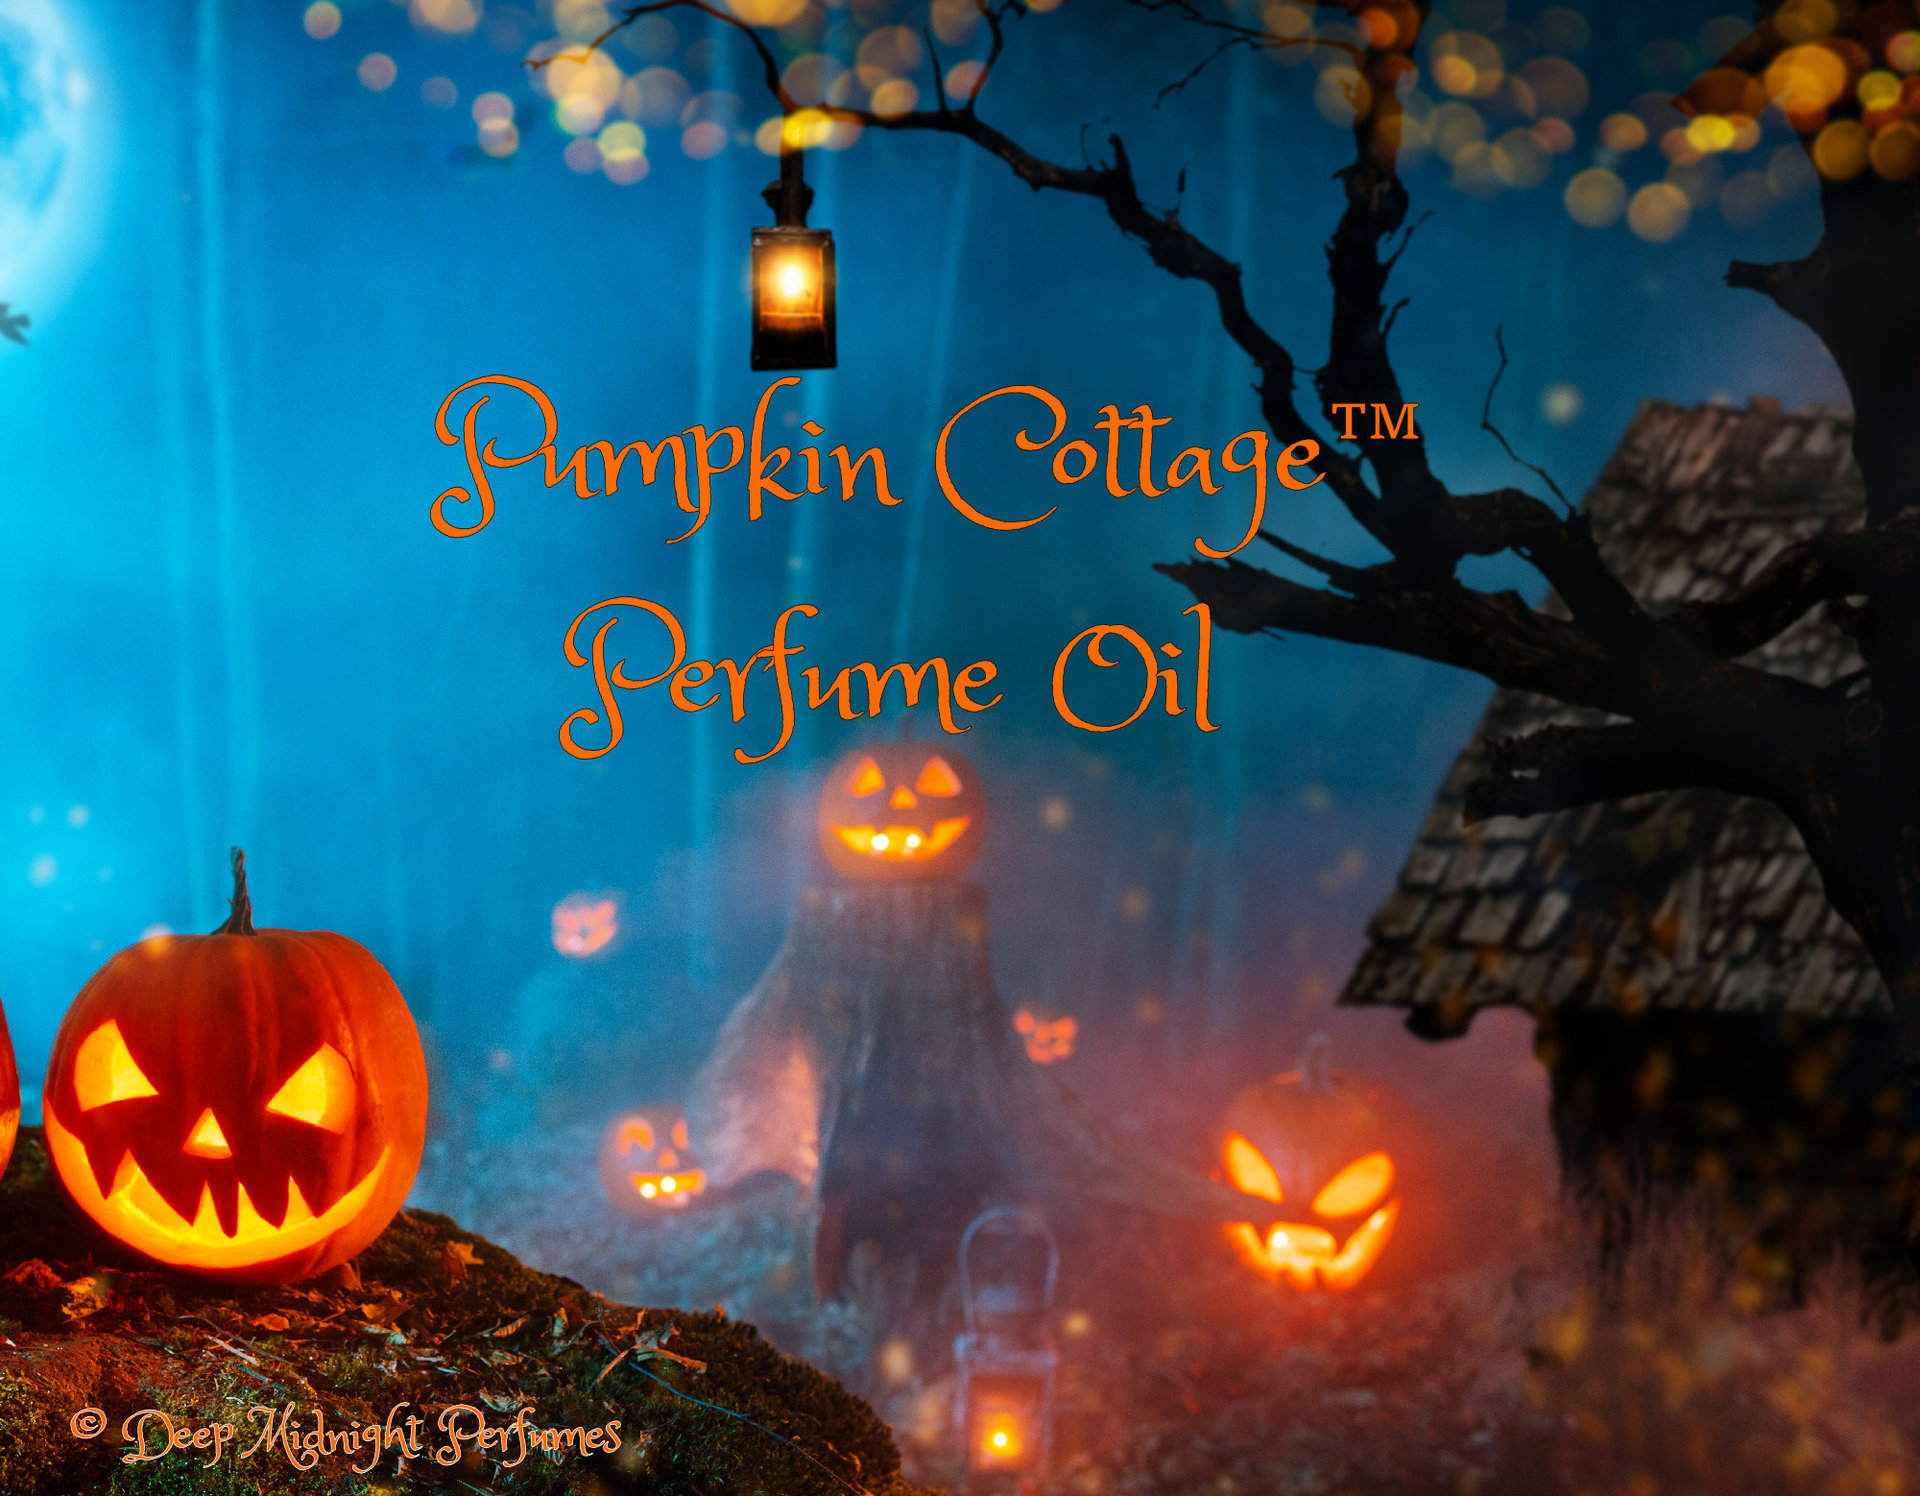 PUMPKIN COTTAGE™ Perfume Oil - Pumpkin, Black Coffee, Clove, Cardamom, Lavender, Firewood, Cream, Wood - Halloween Perfume - Pumpkin Perfume